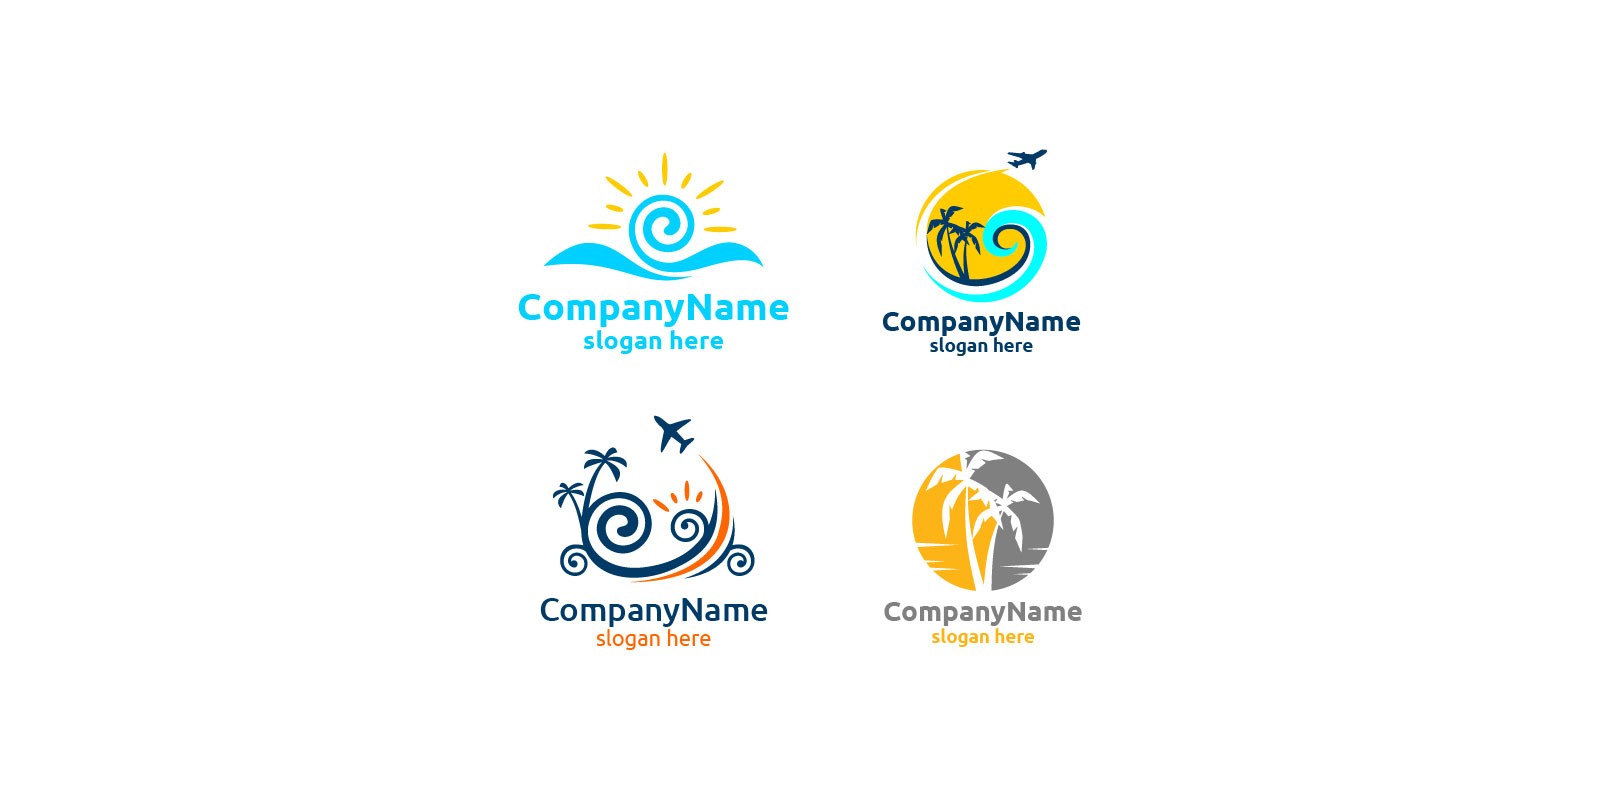 Travel And Tourism Logos